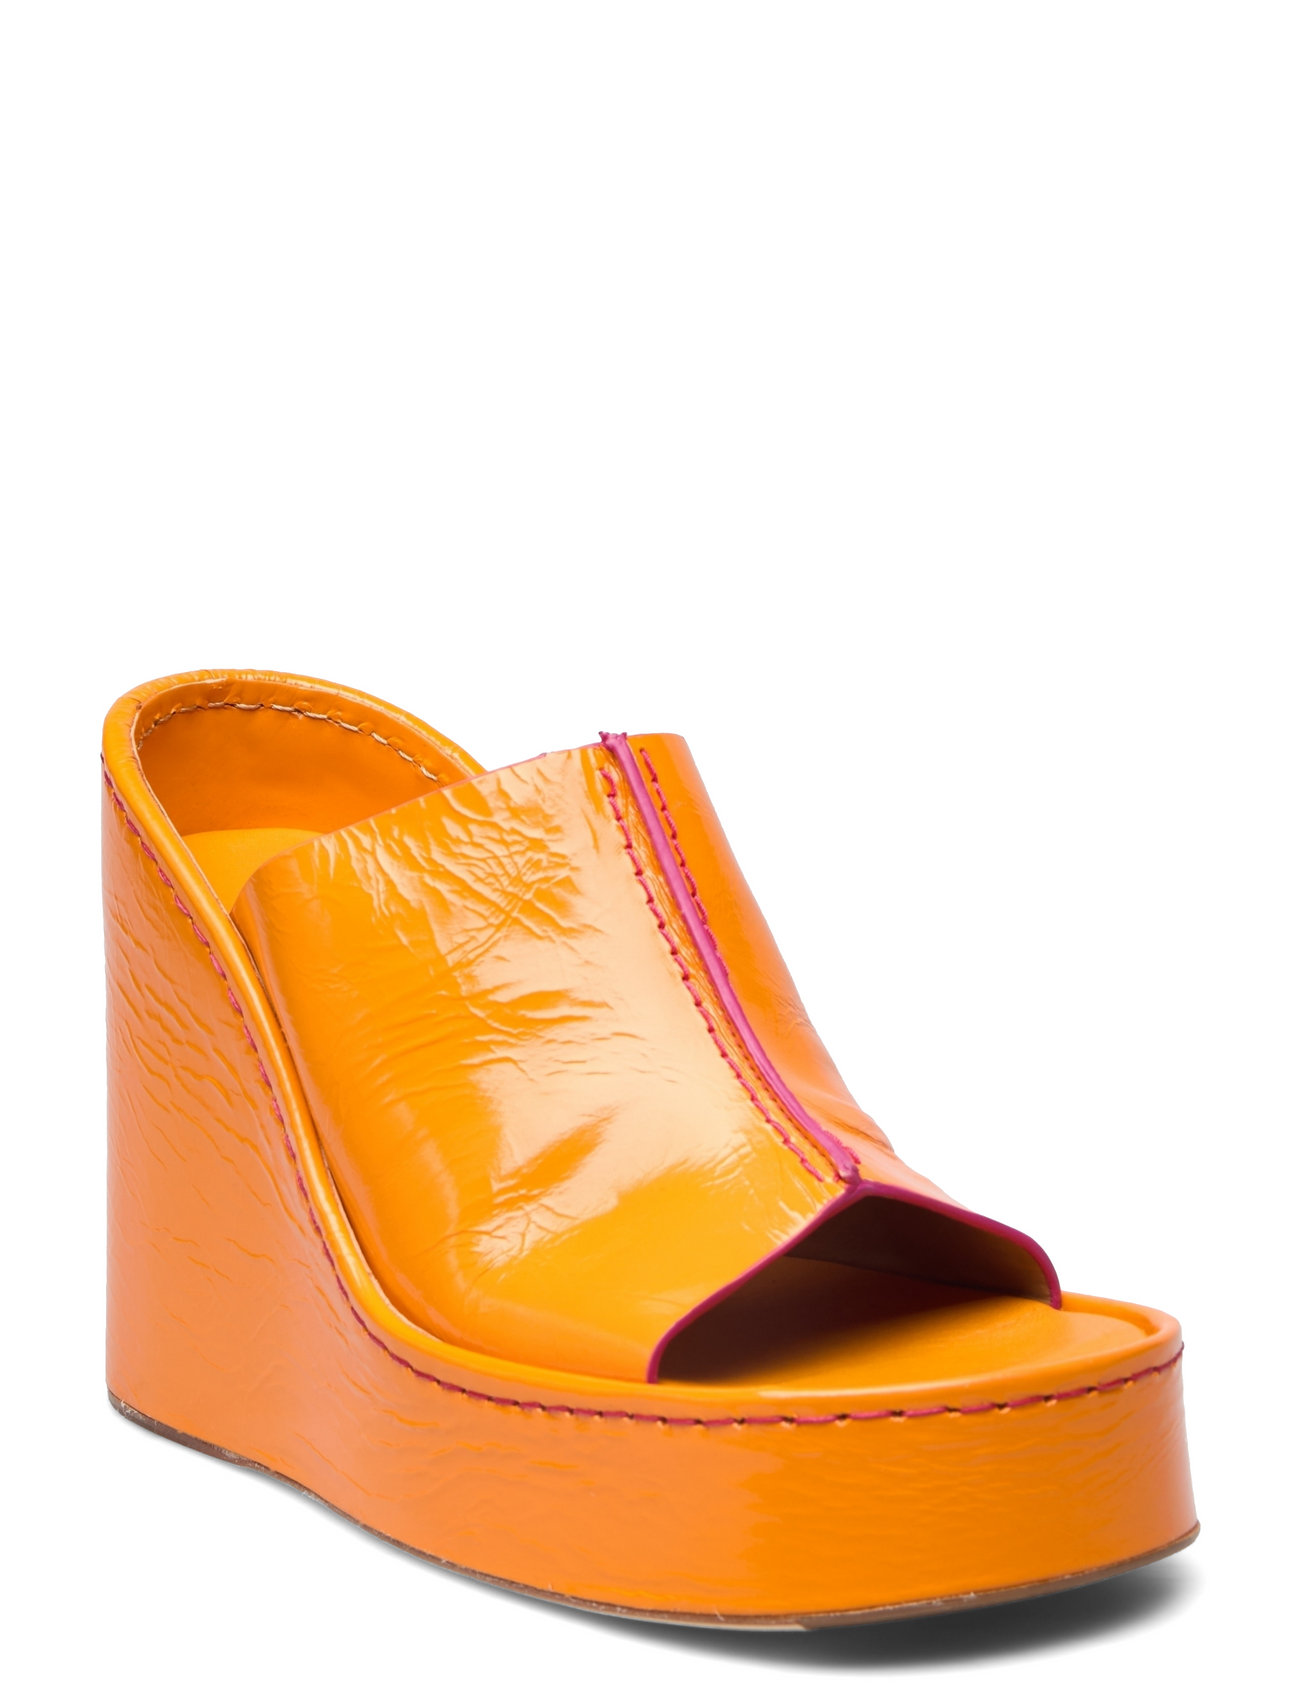 MIISTA Rhea Orange Mule Sandals - Mules & slipins - Boozt.com